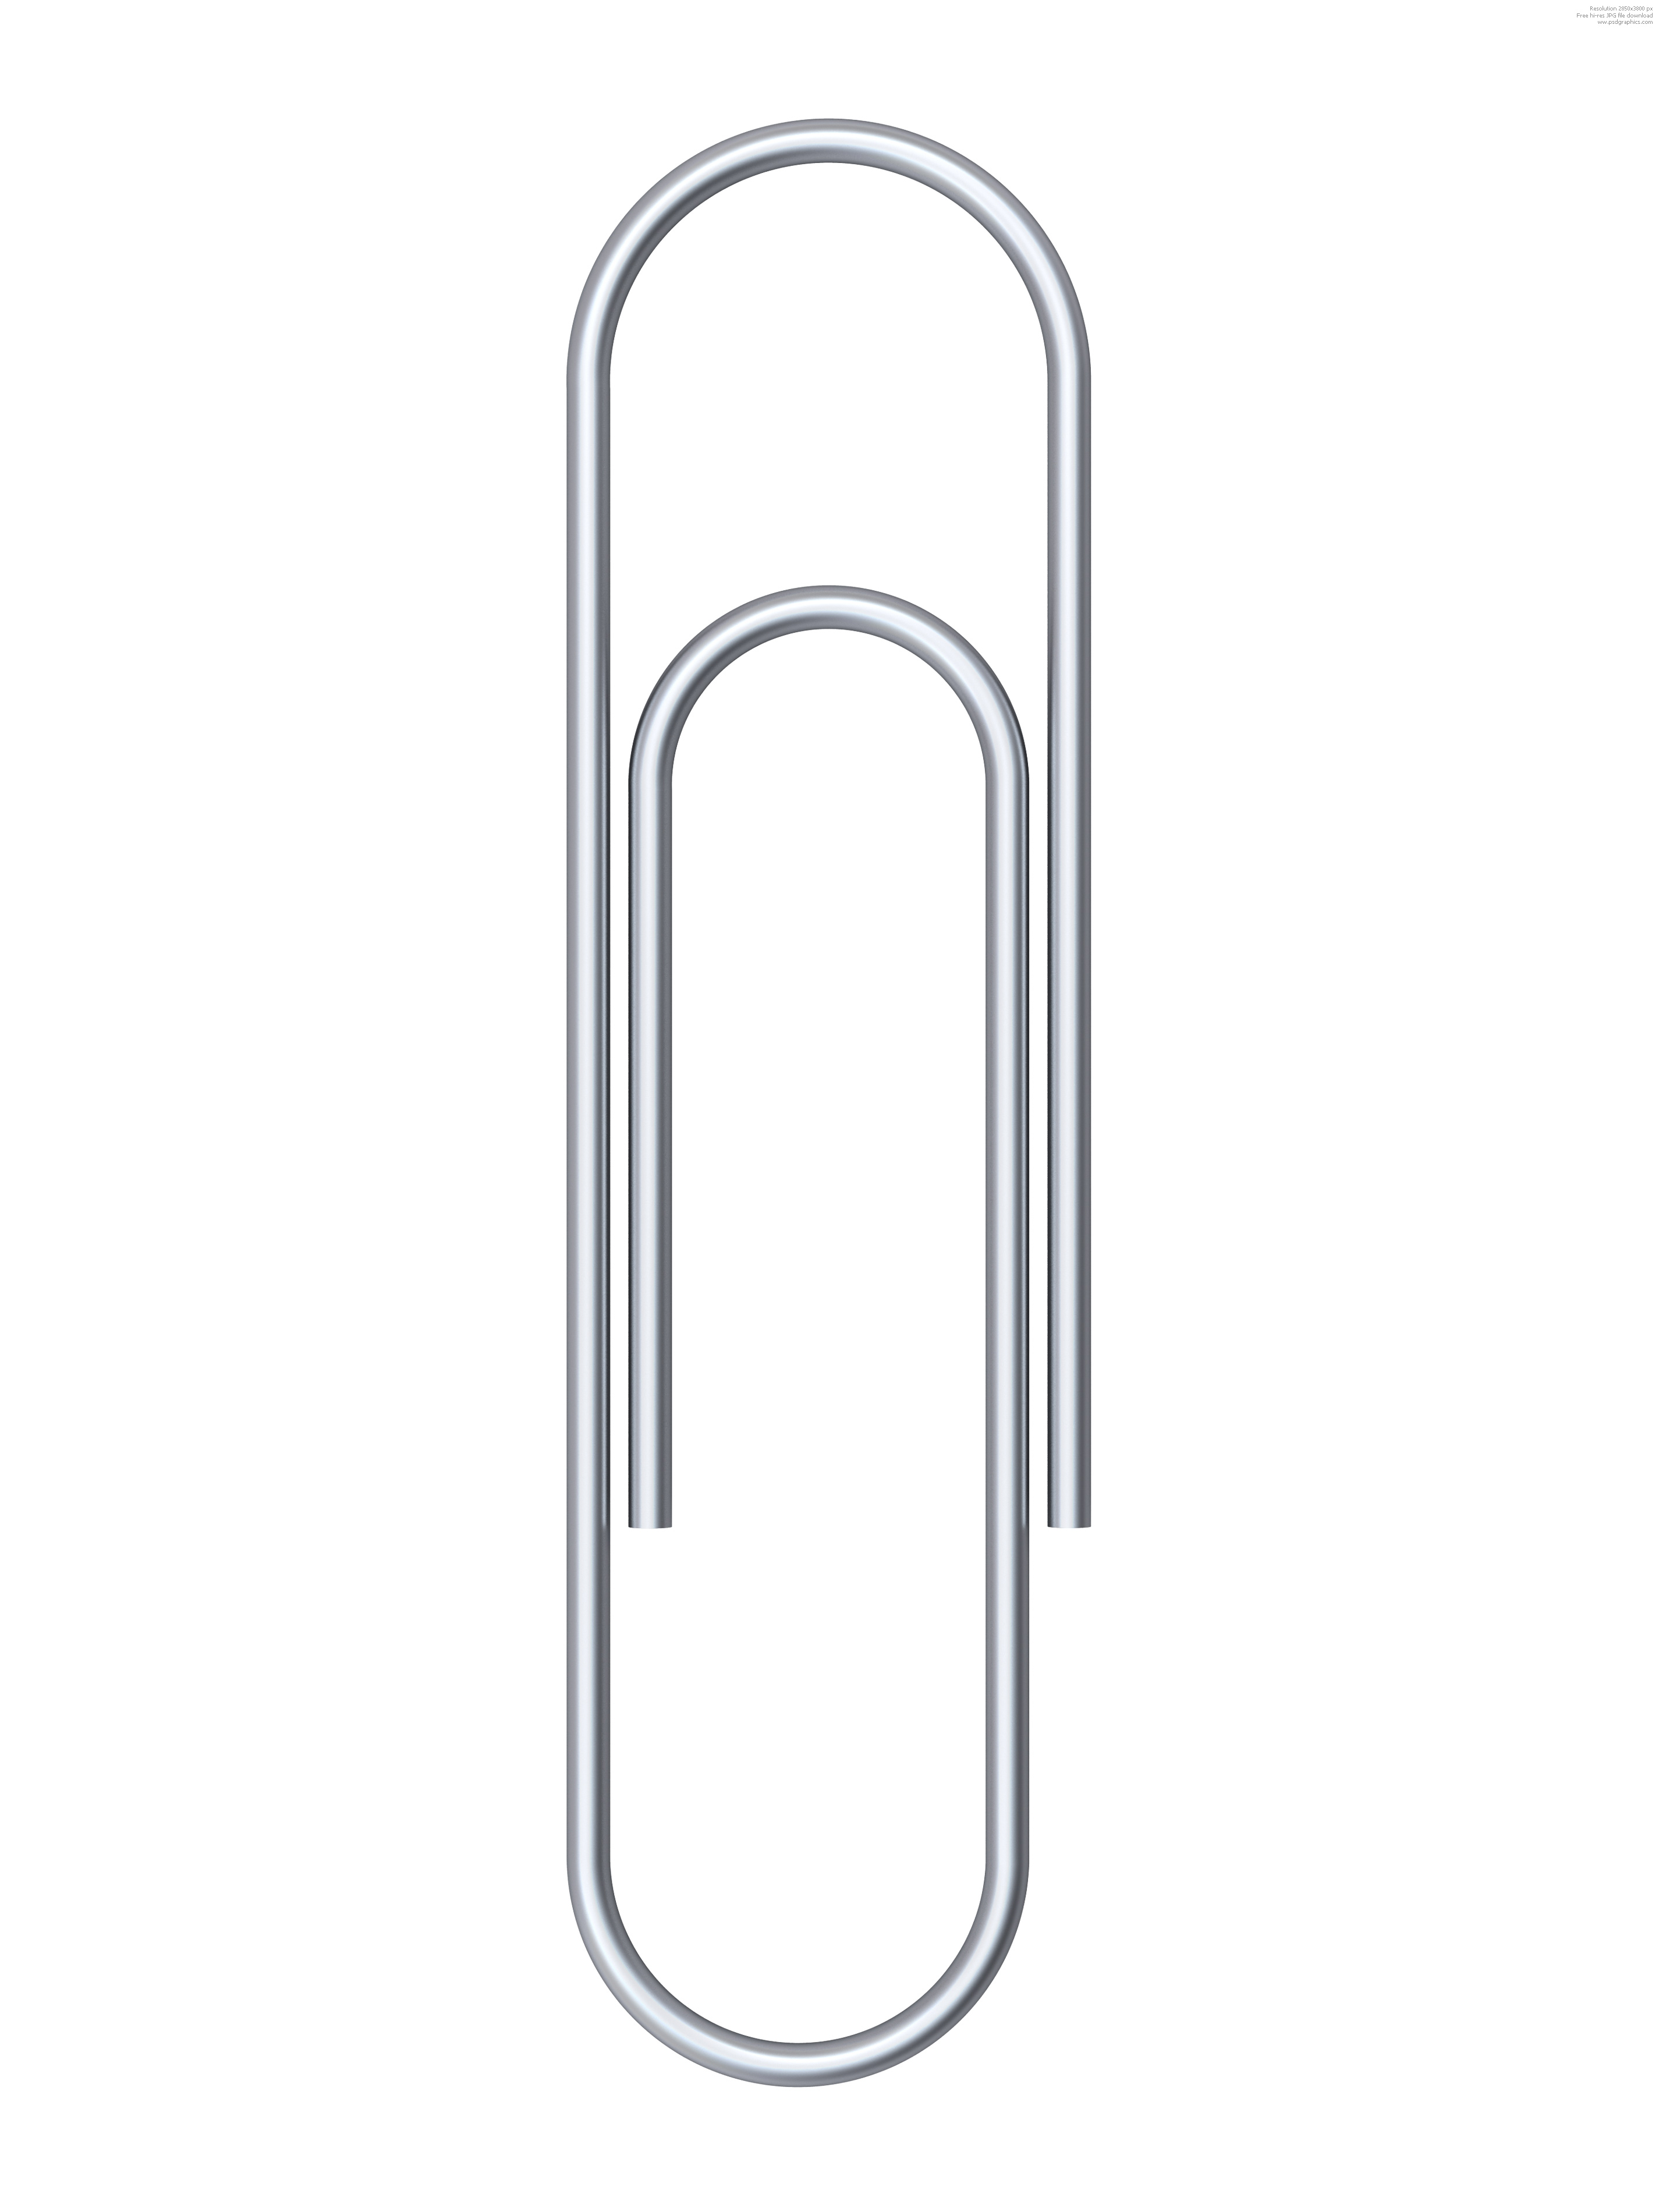 Set of metallic paper clips R